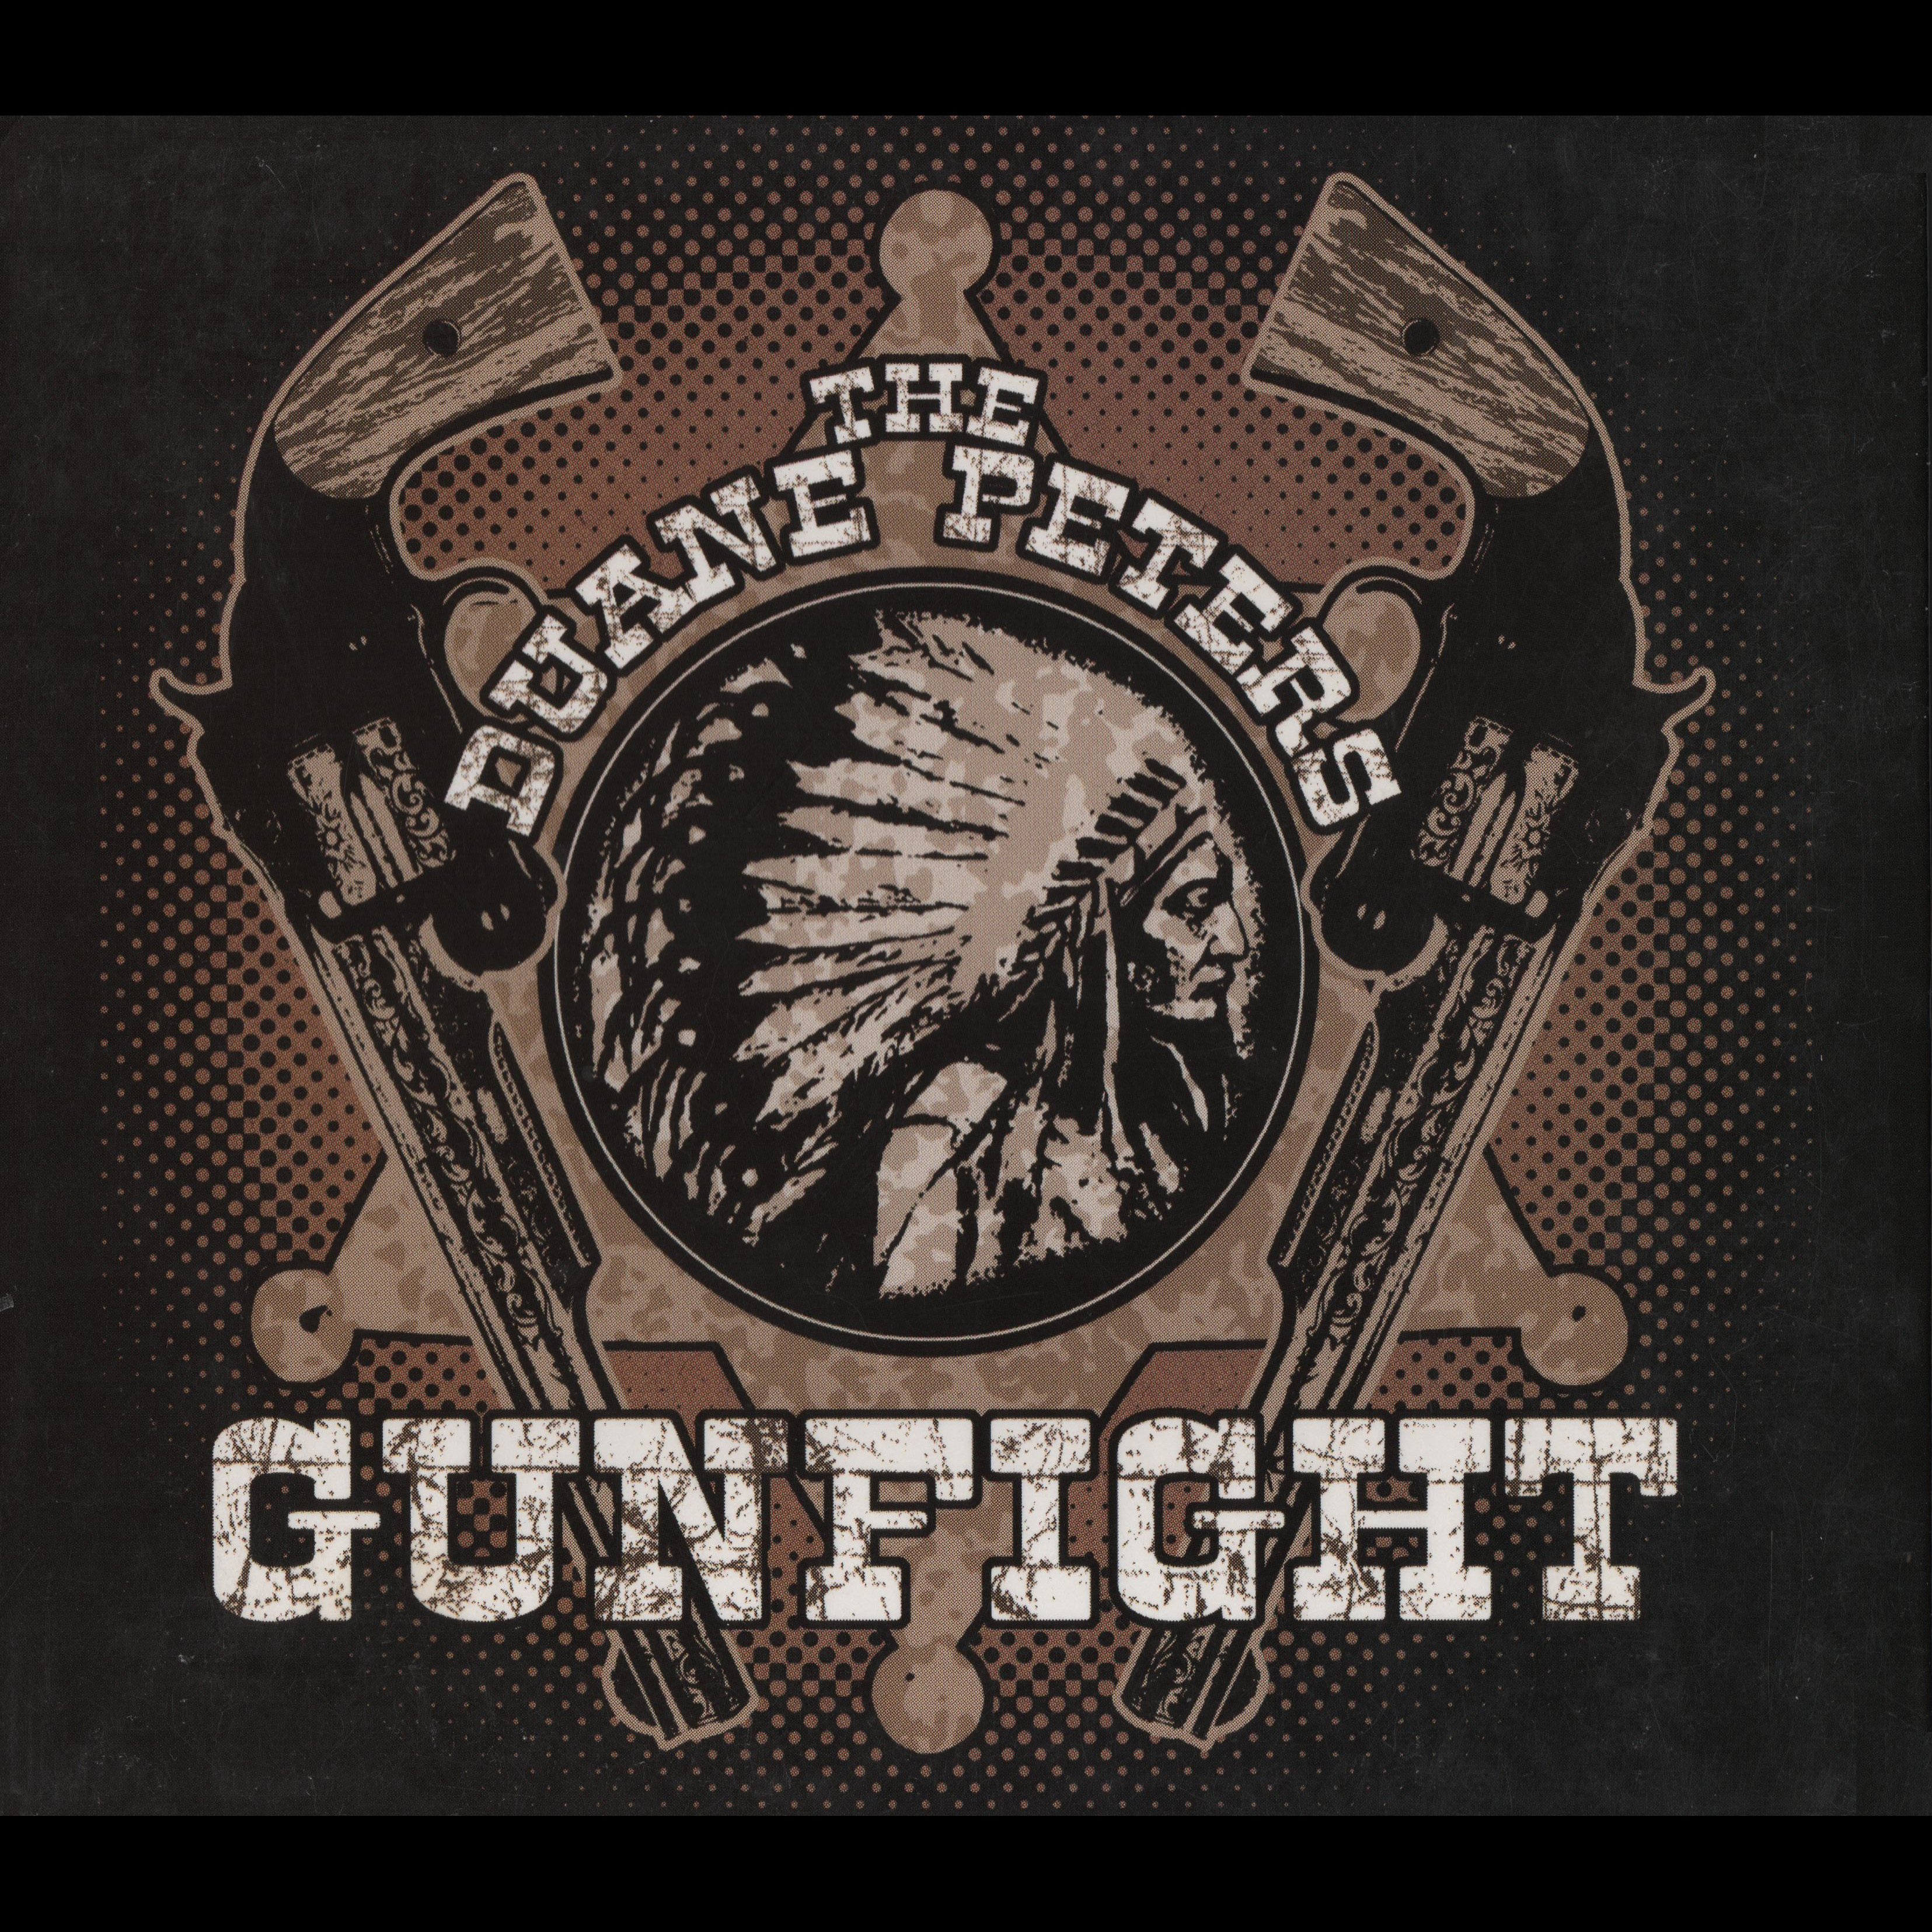 Gun fight. Pocket Pistols Duane Peters. The Gunfighters Band logo.